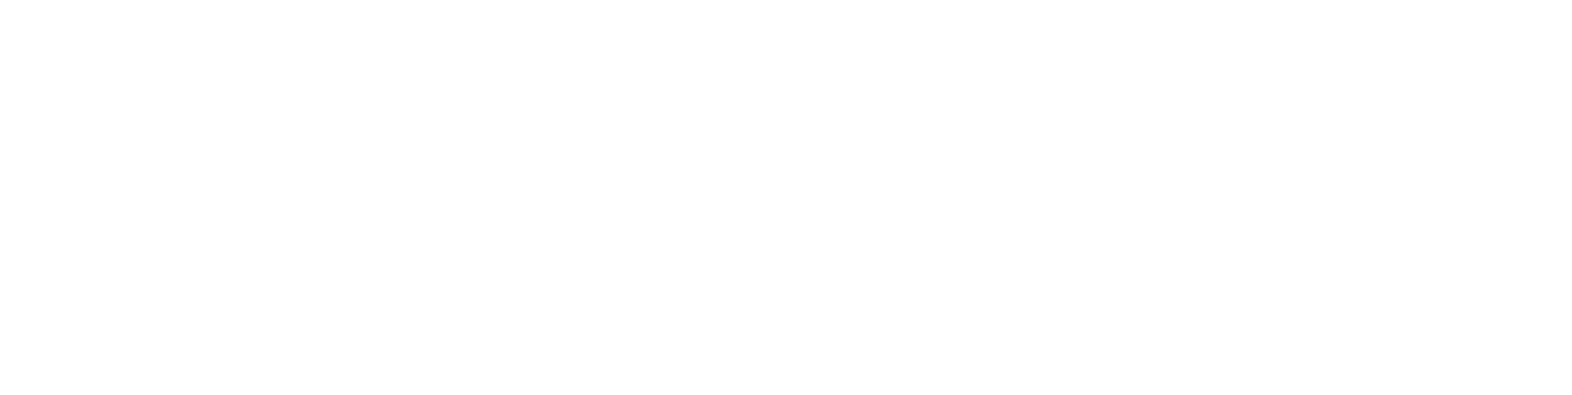 Federated Hermes
 logo large for dark backgrounds (transparent PNG)